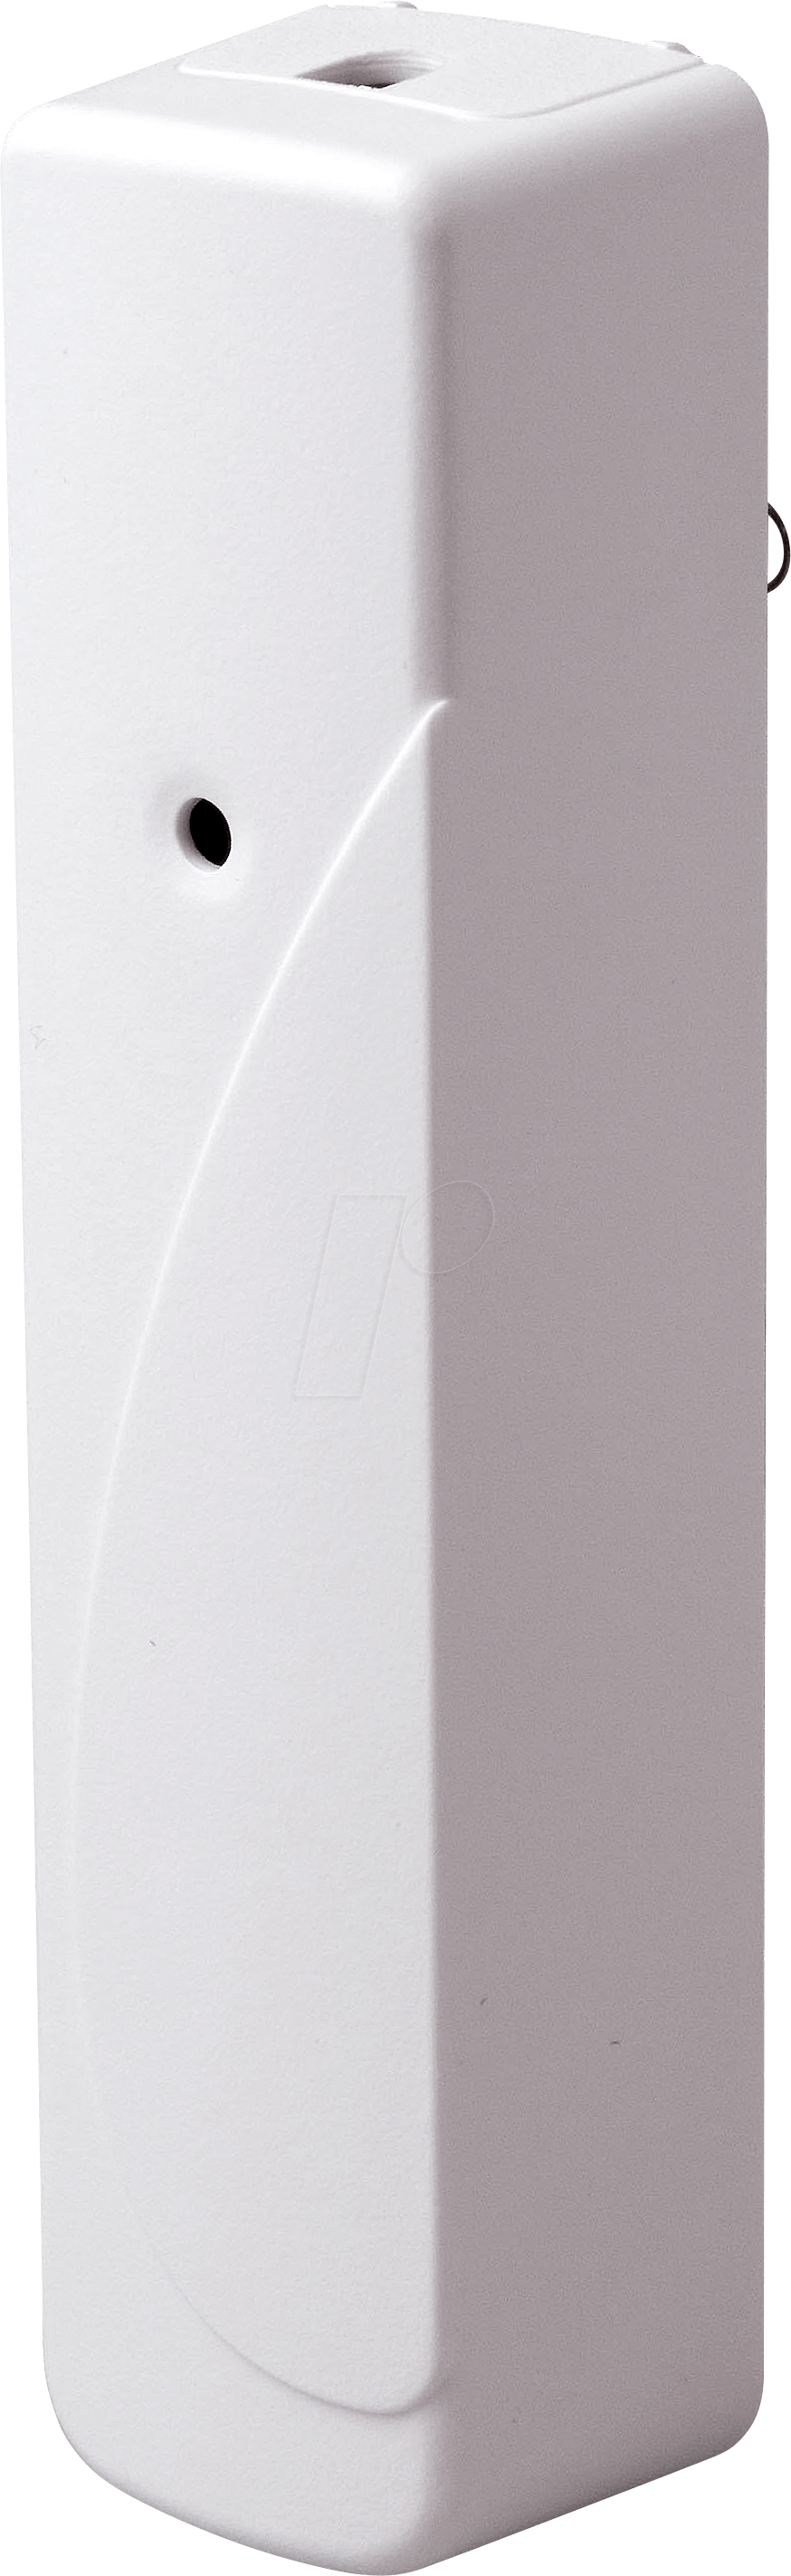 LS 12124 - Temperatursensor mit Fühler von LUPUS